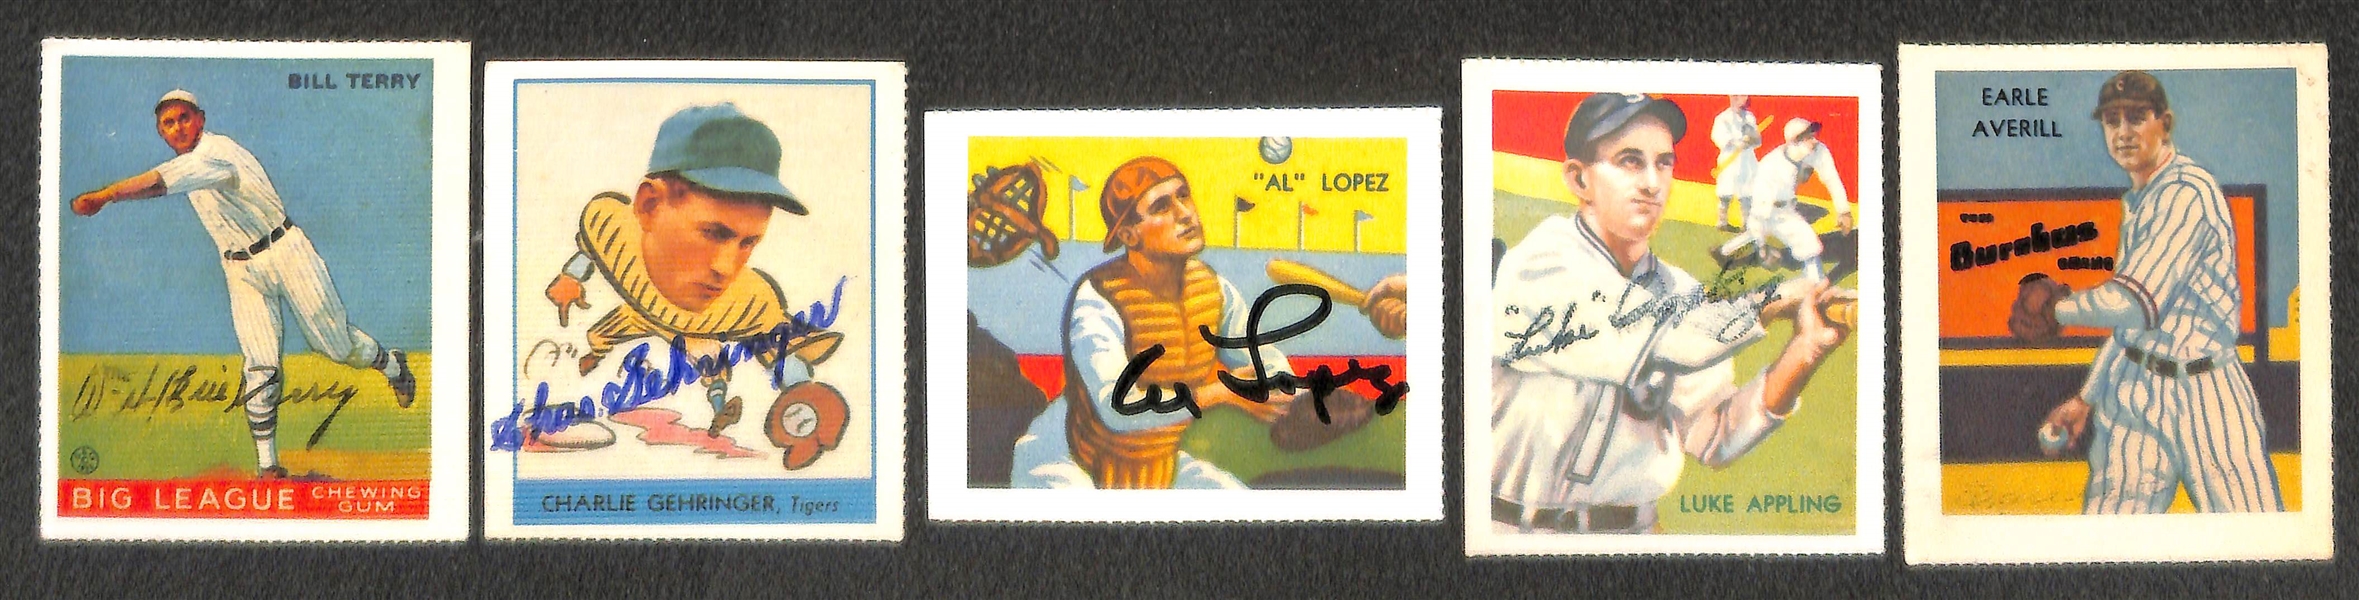 (15) Autographed Reprint Baseball Cards & (4) 1968 R.G. Laughlin Mostly HOF Autographed Cards (JSA Auction Letter)